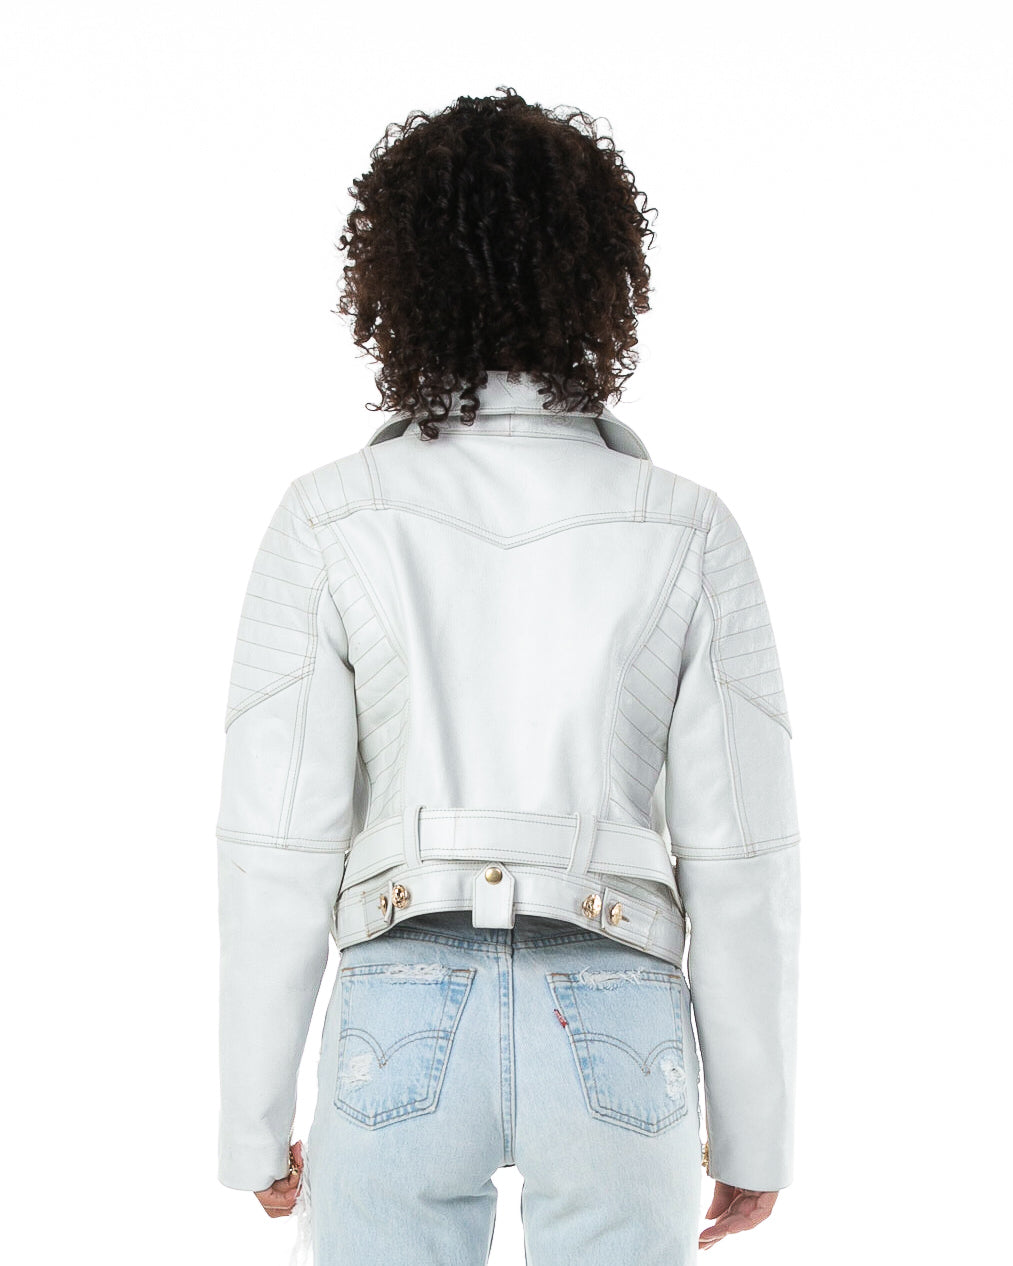 Backside of female model wearing Prince leather jacket